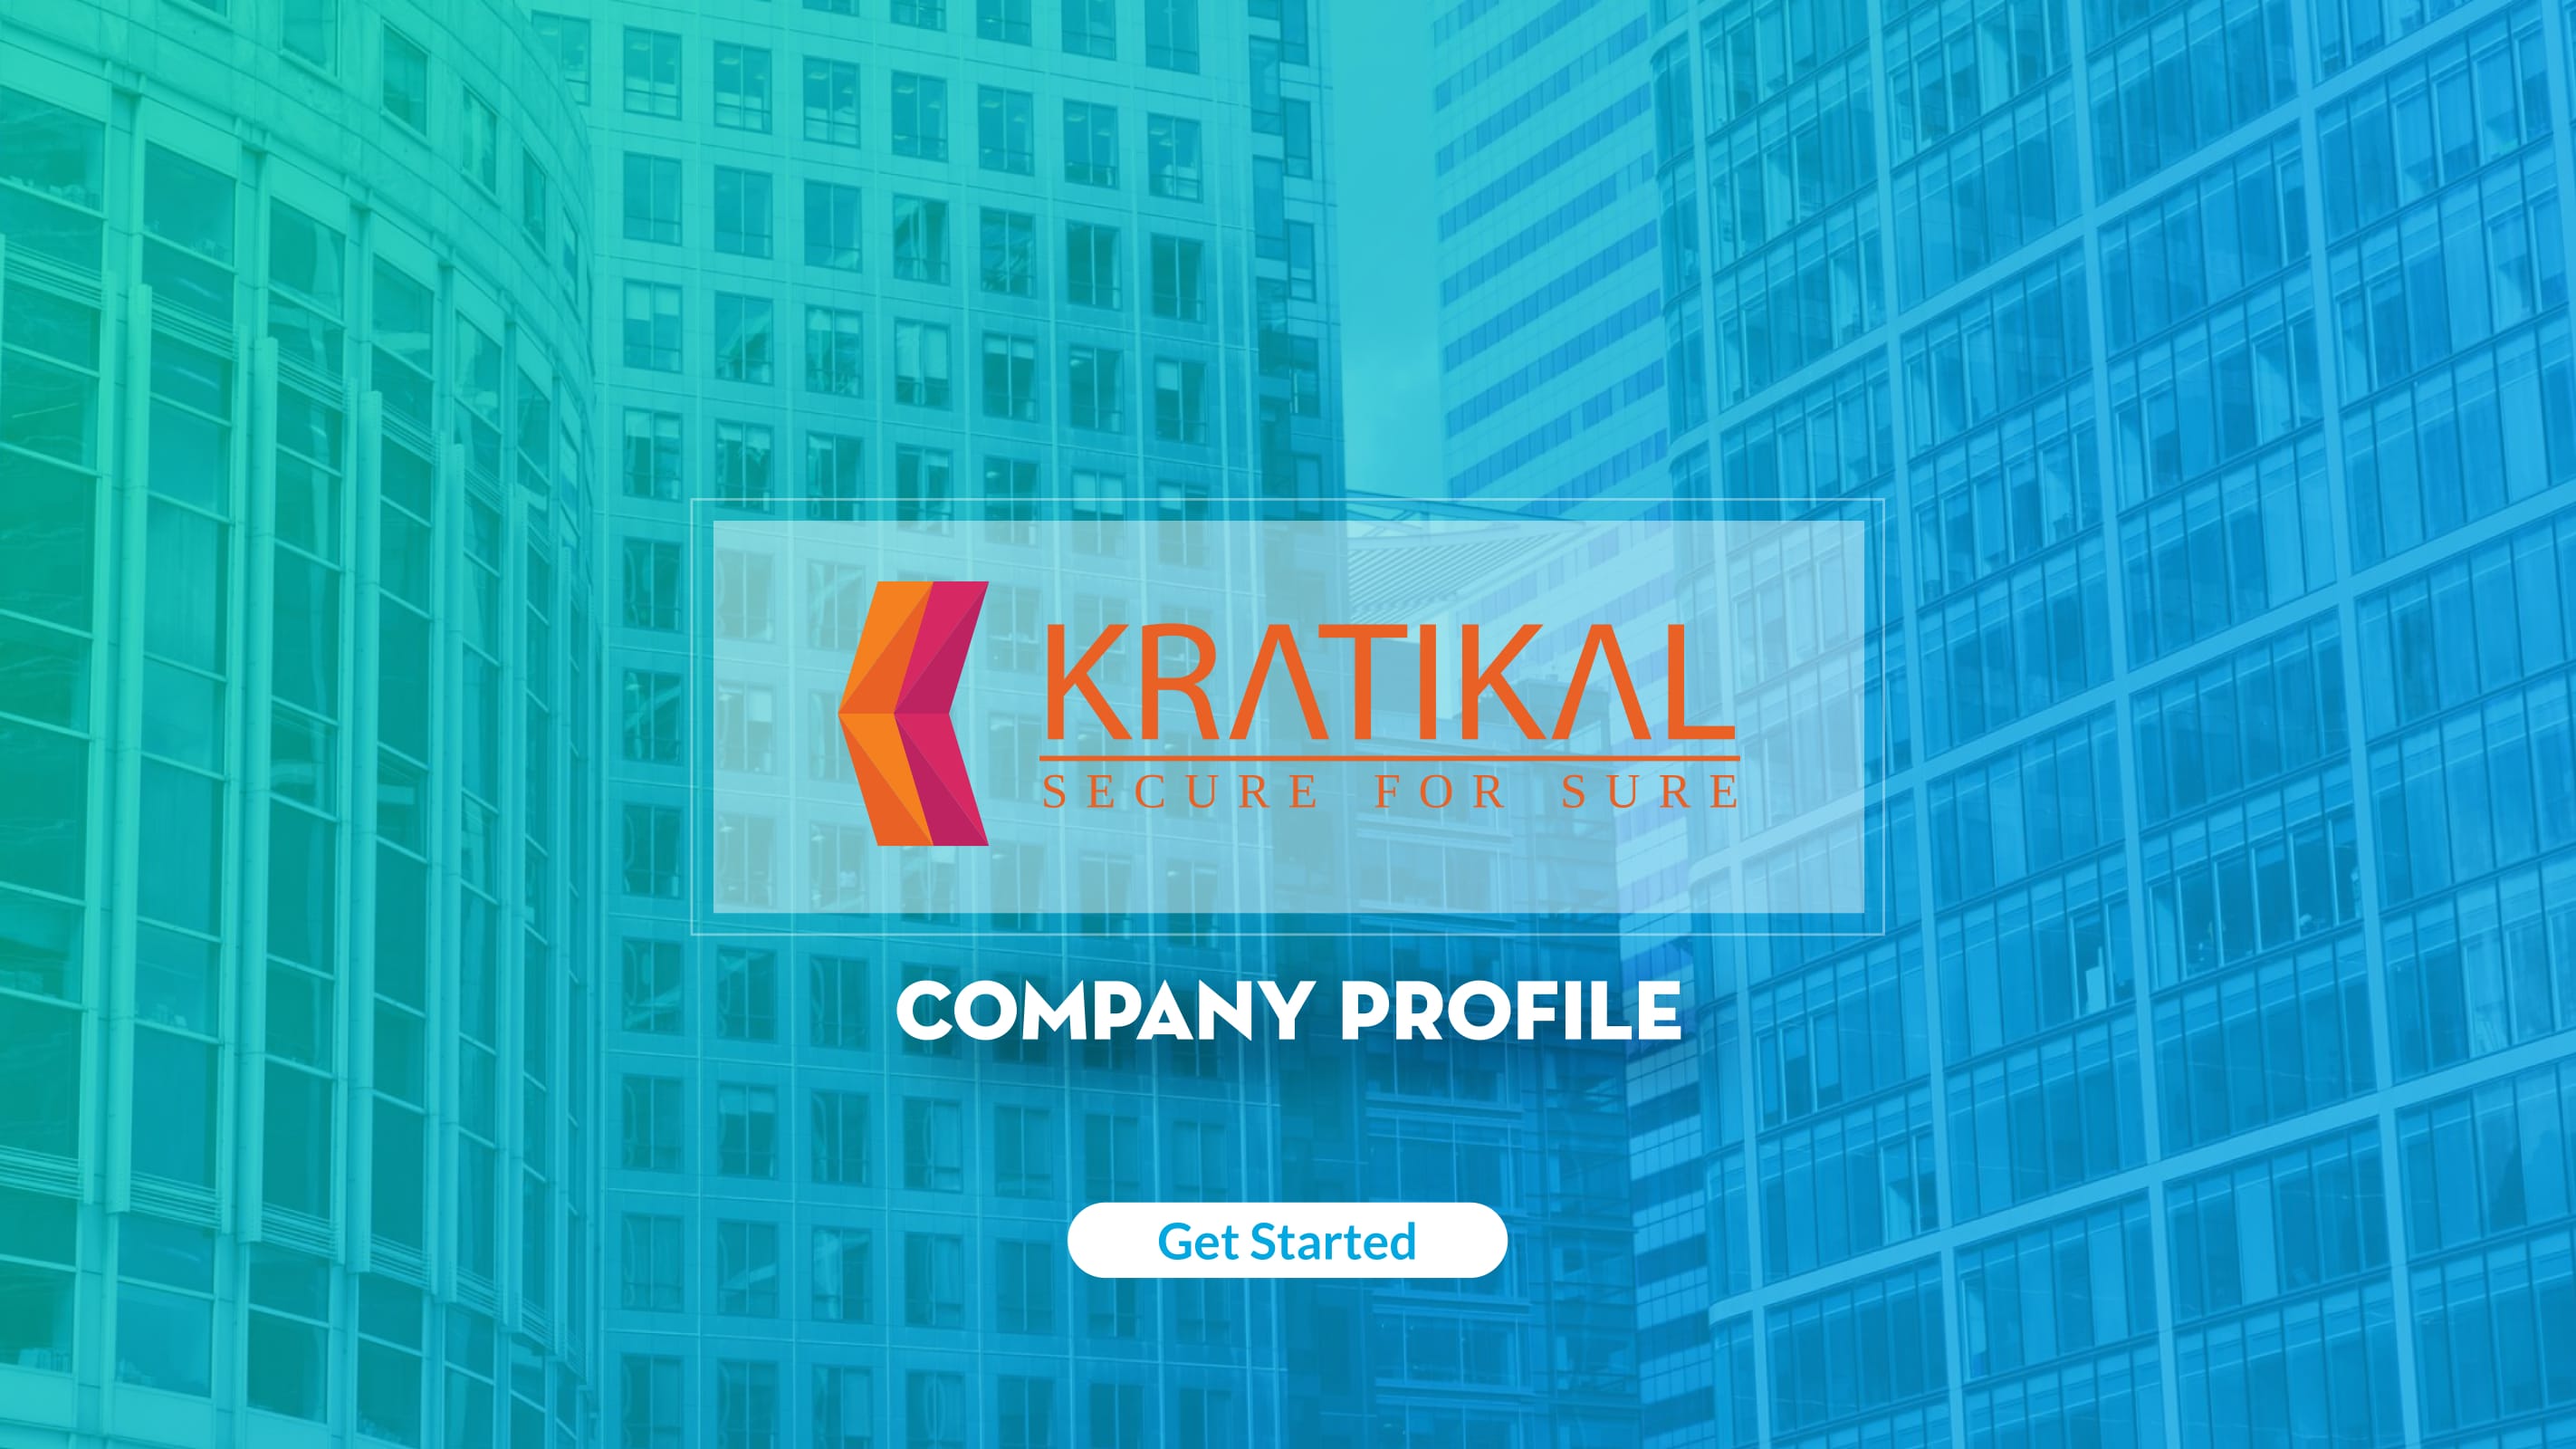 Kratikal Company Profile